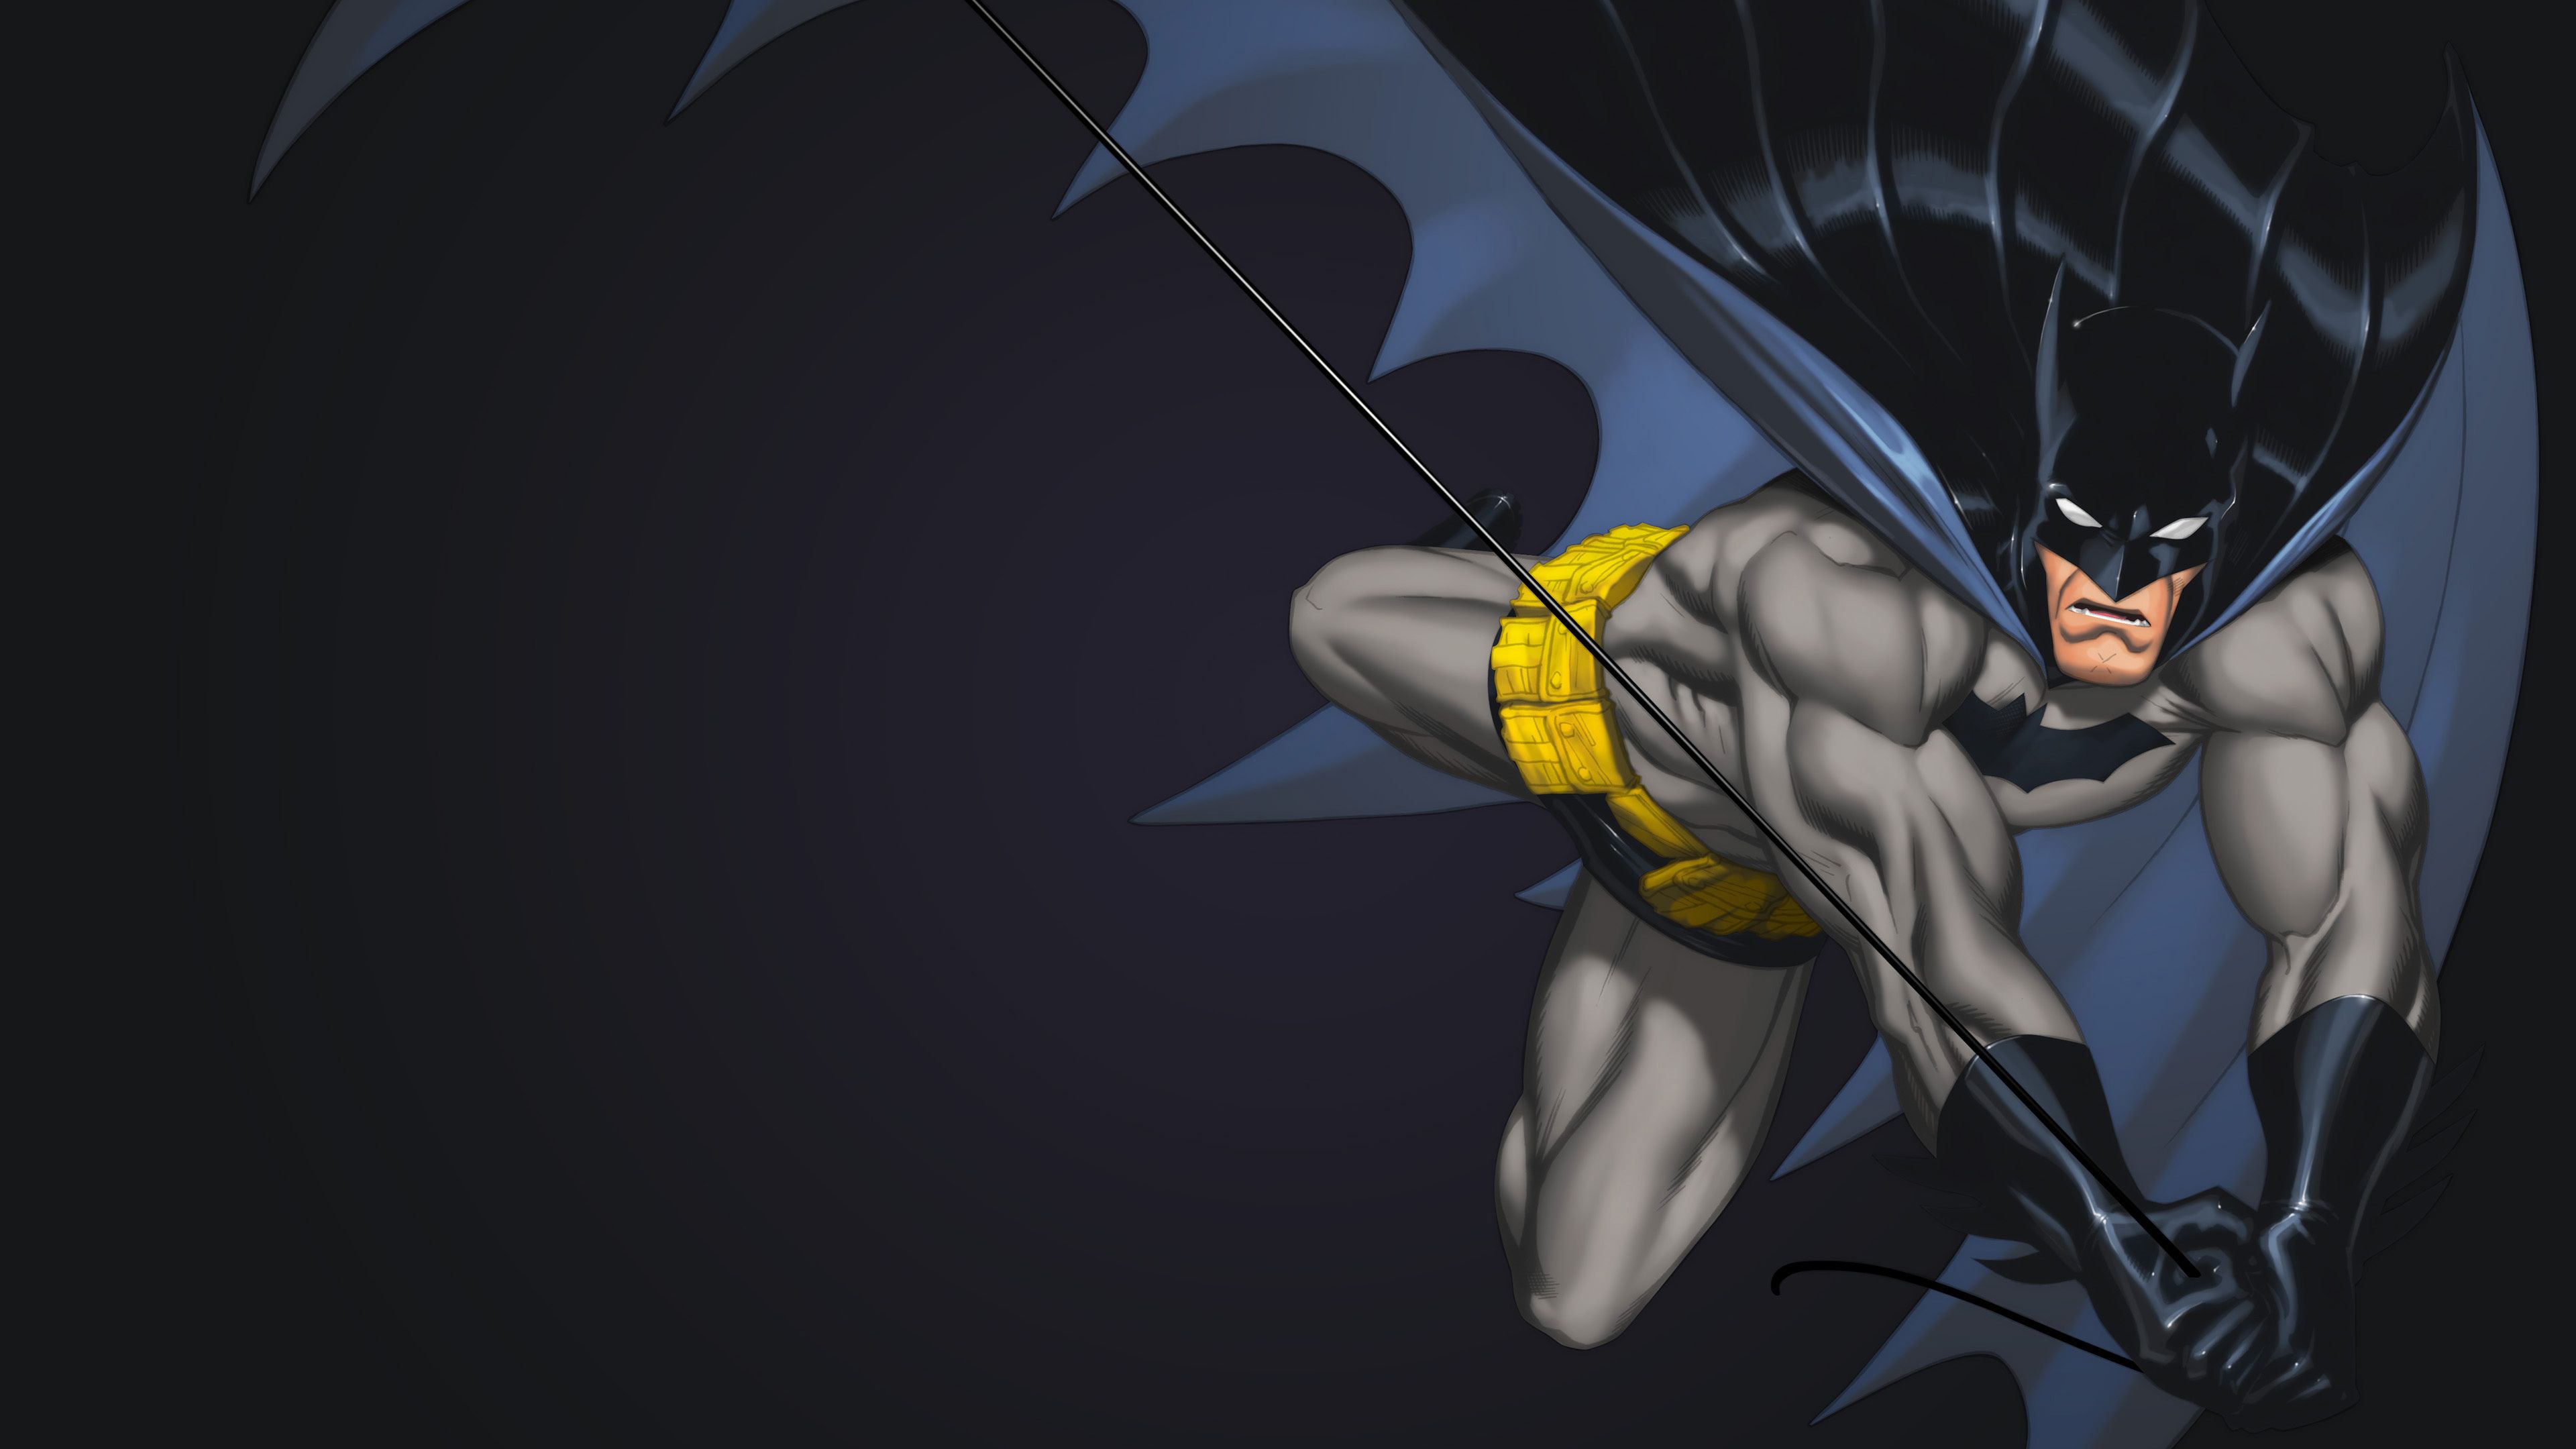 Batman Art 4k Superhero, HD Superheroes, 4k Wallpaper, Image, Background, Photo and Picture